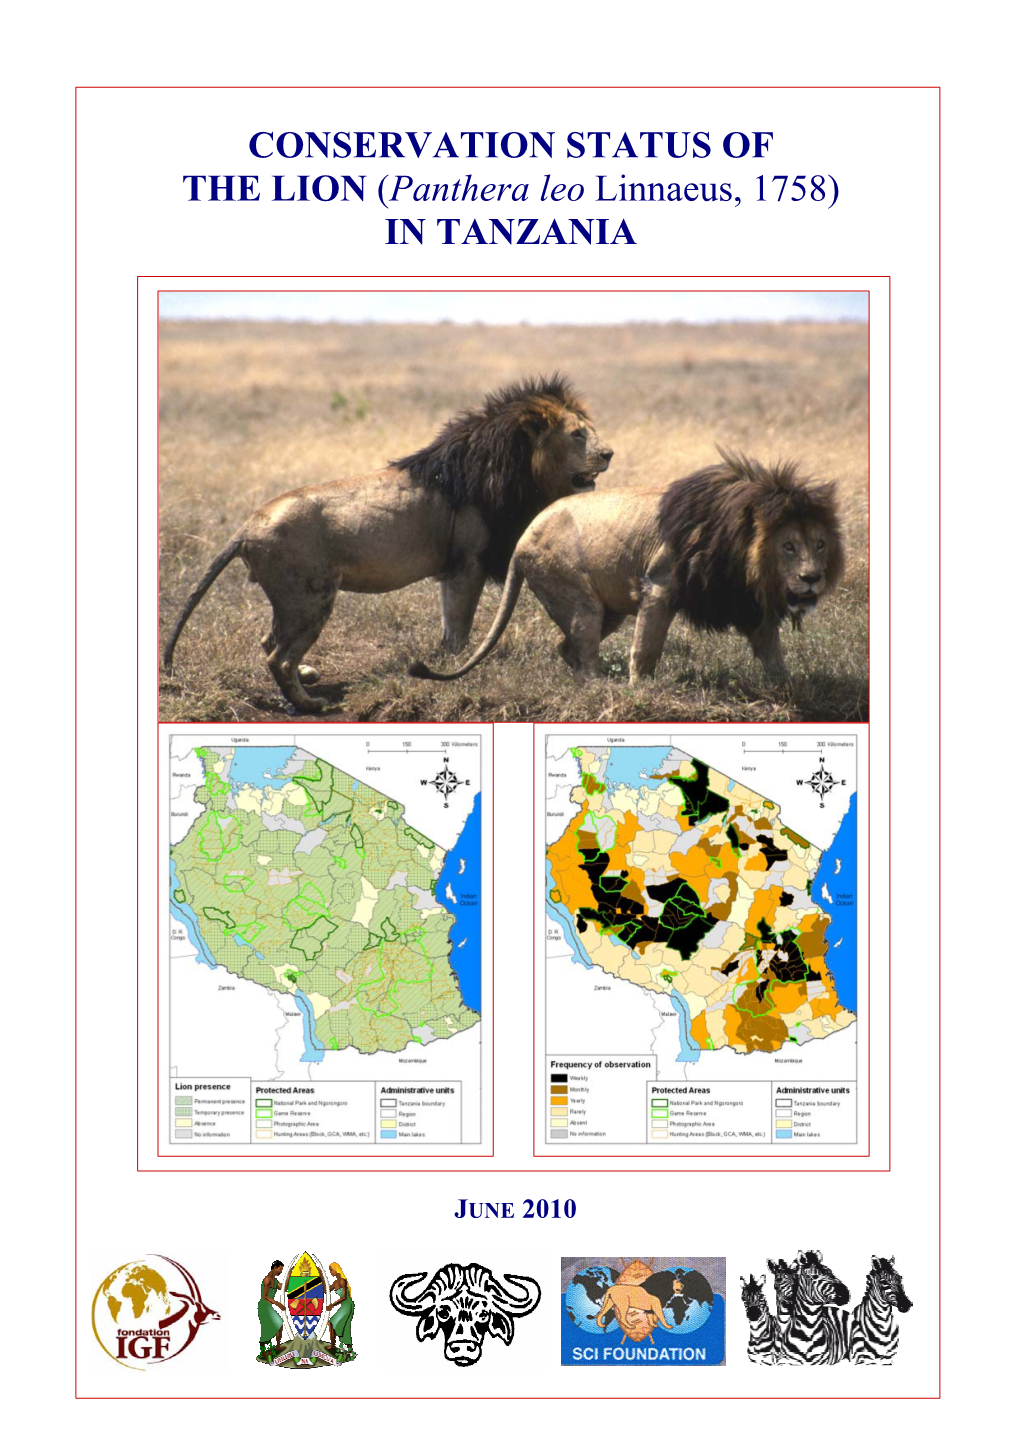 CONSERVATION STATUS of the LION (Panthera Leo Linnaeus, 1758) in TANZANIA